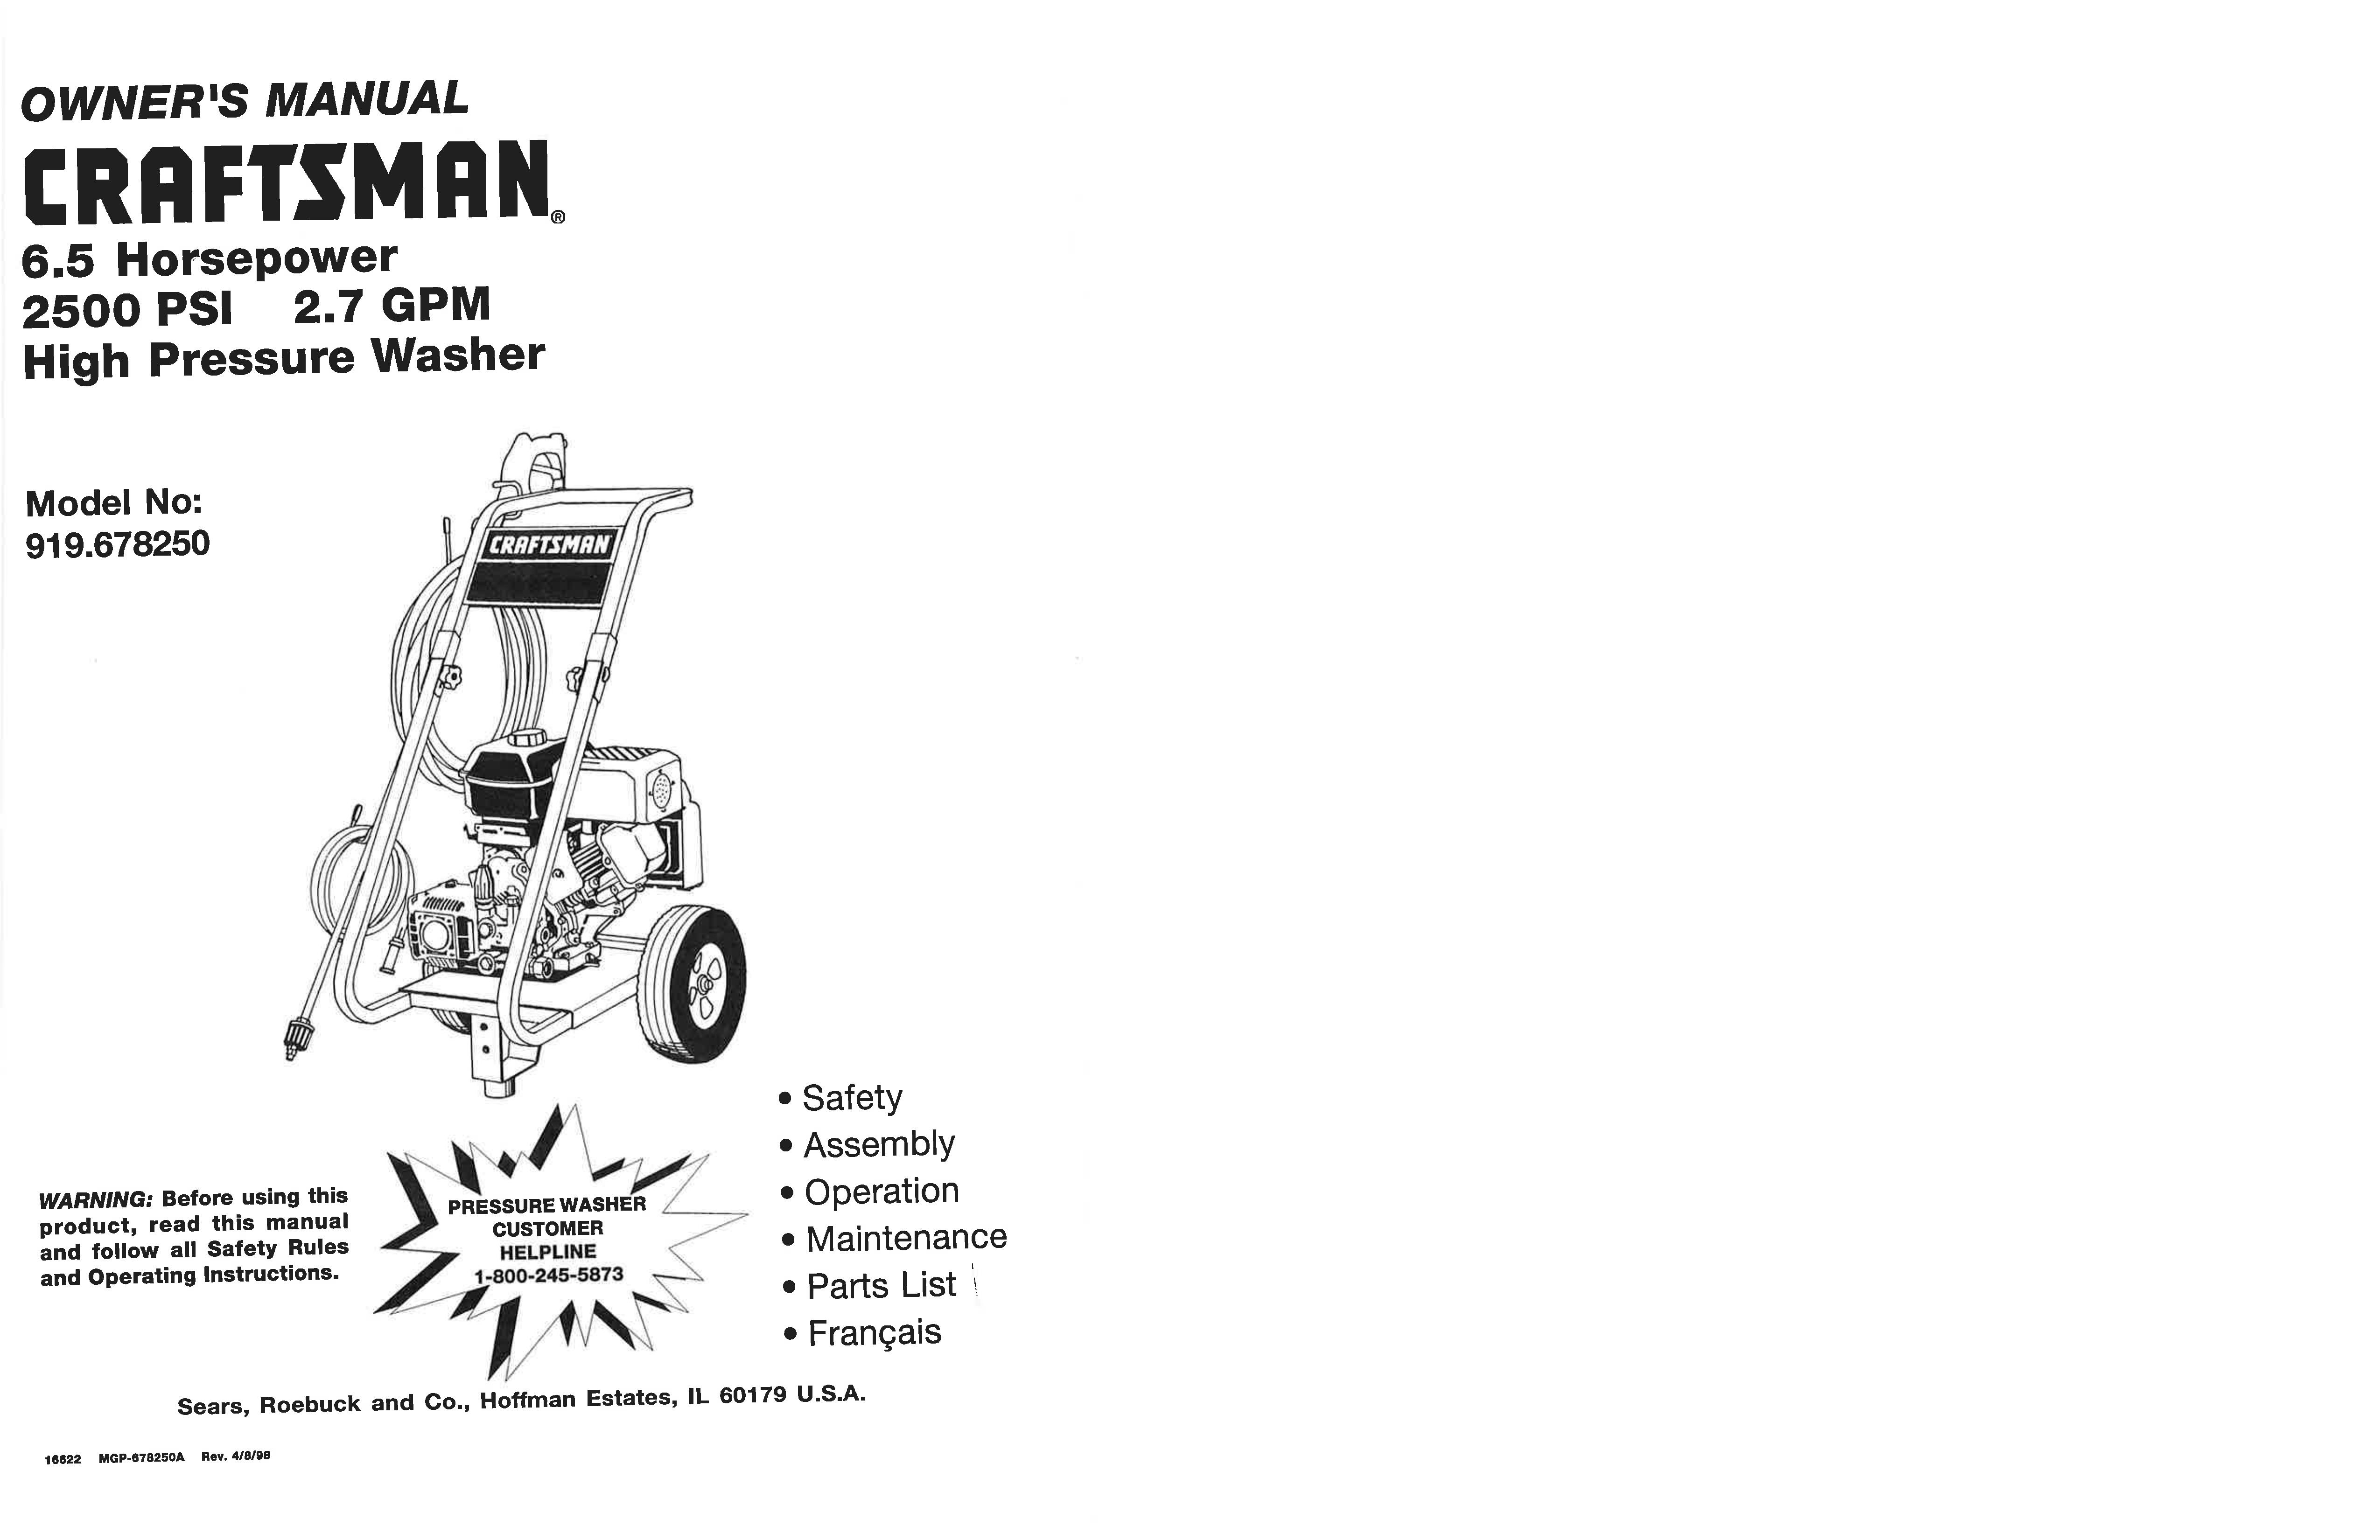 Craftsman 919.678250 Pressure Washer User Manual